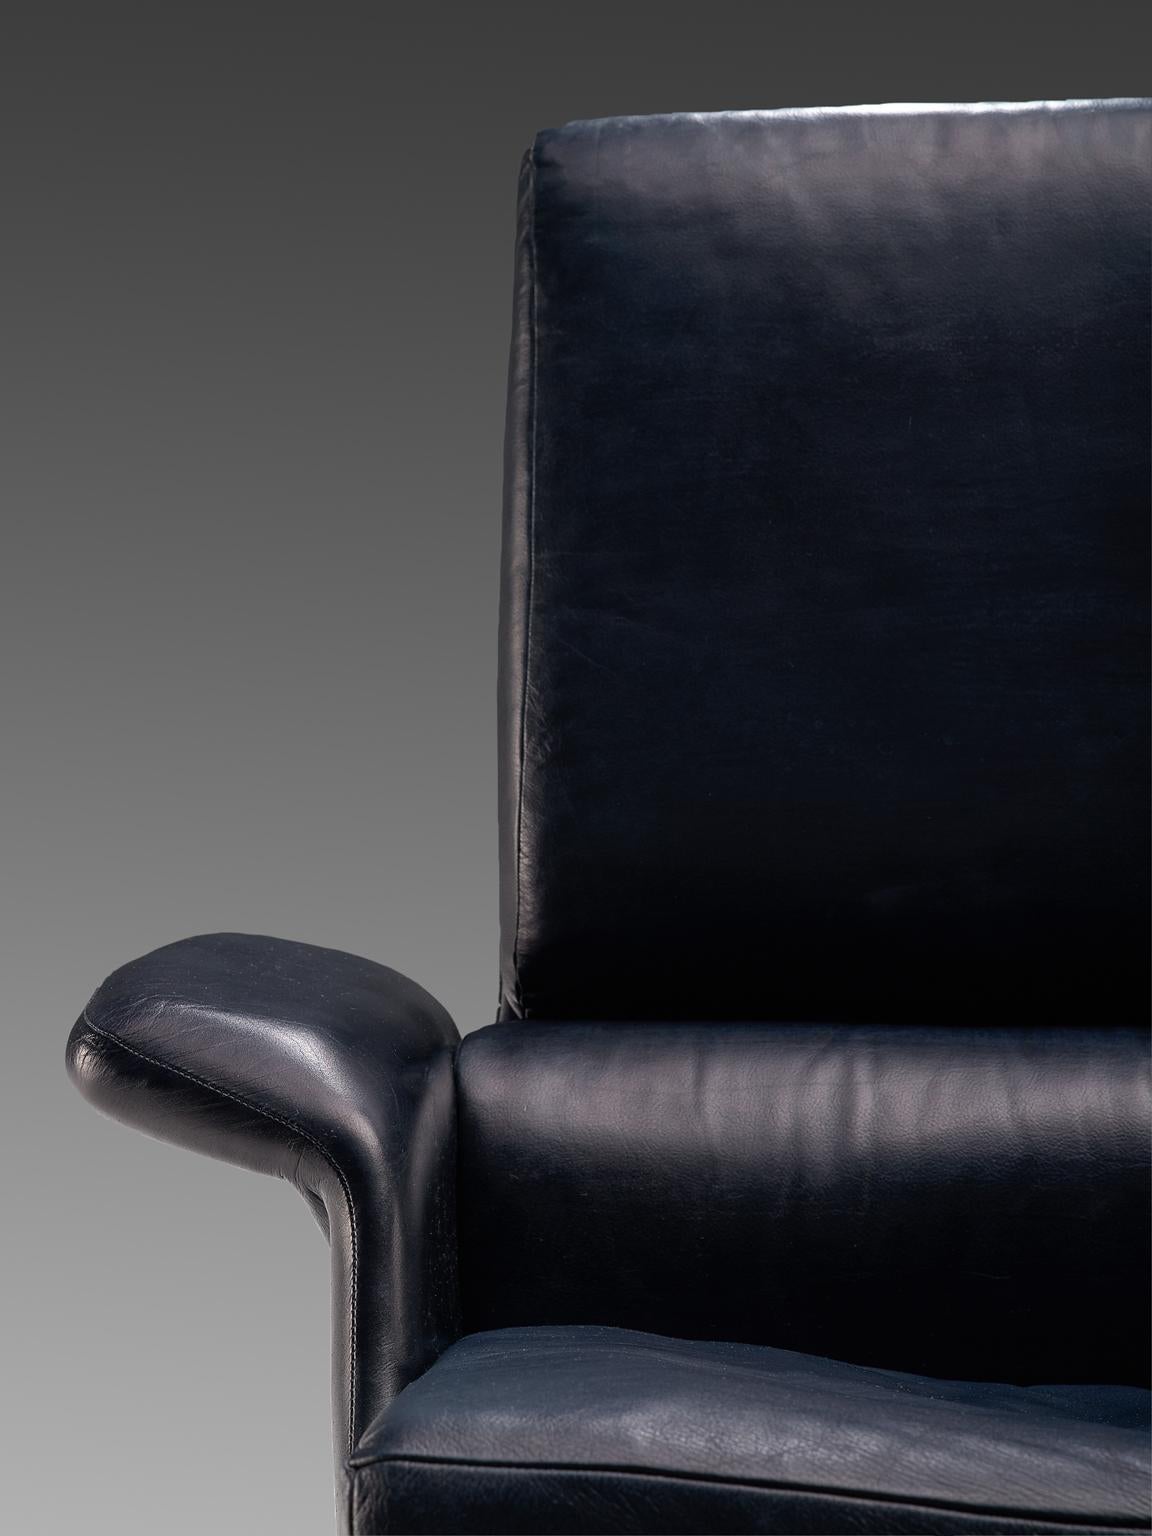 Ib Kofod-Larsen Adam Blue Leather Lounge Chair 1